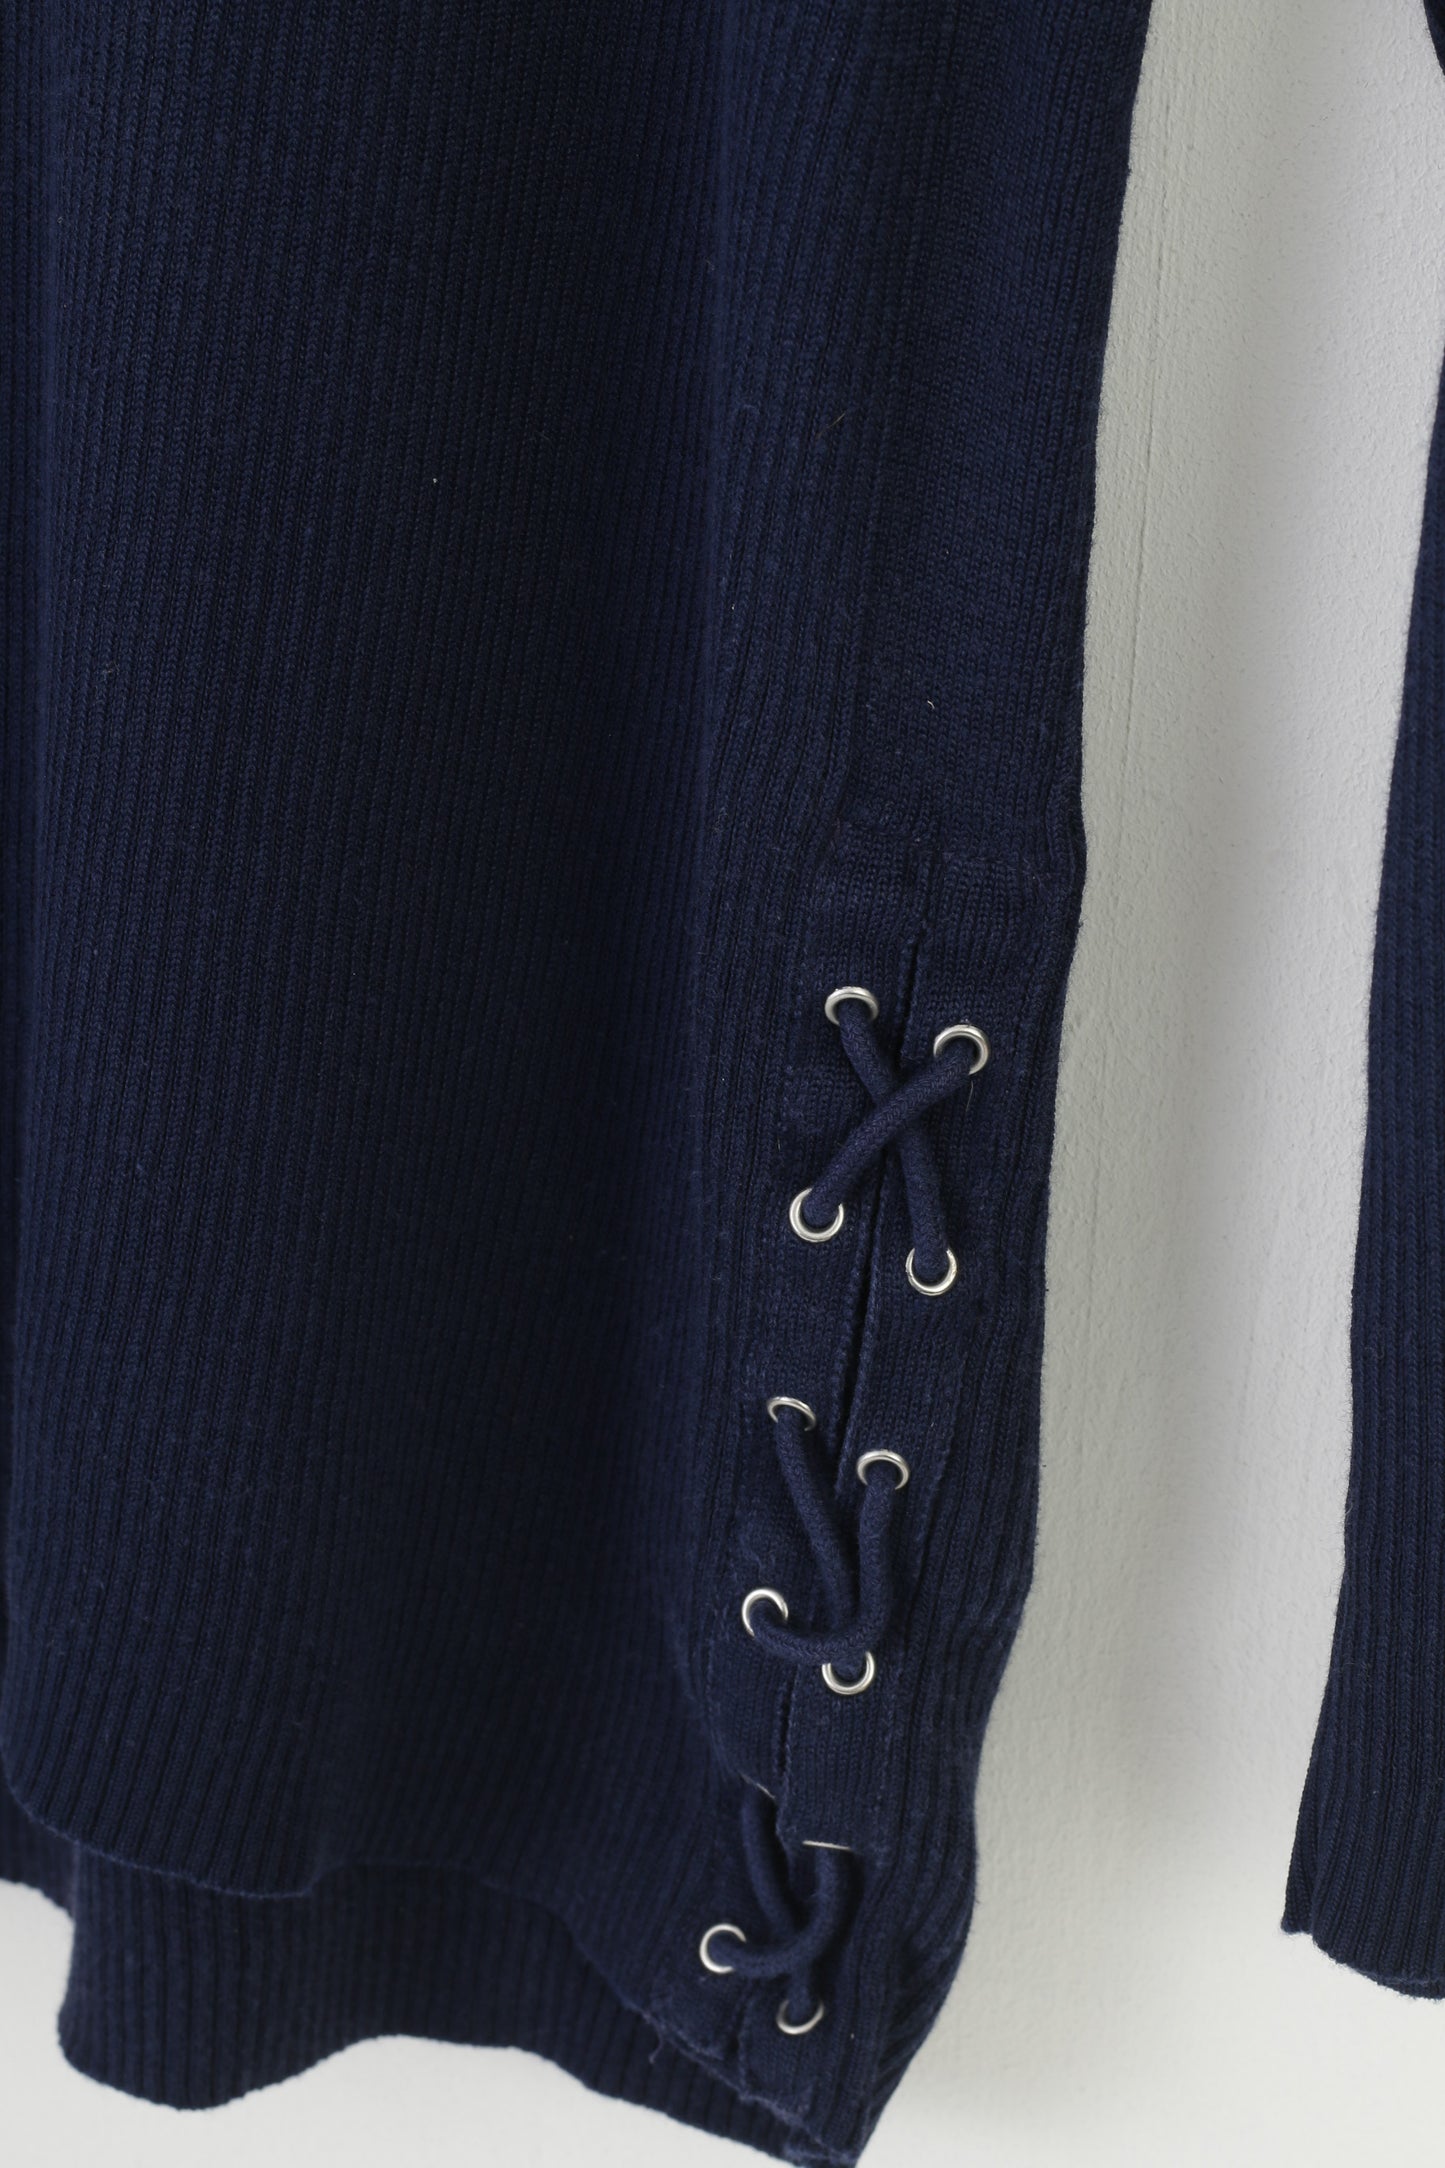 Ralph Lauren Woman XL Jumper Navy Fit Crew Neck Cotton Lace Up long Sleeve Striped Vintage Sweater Top